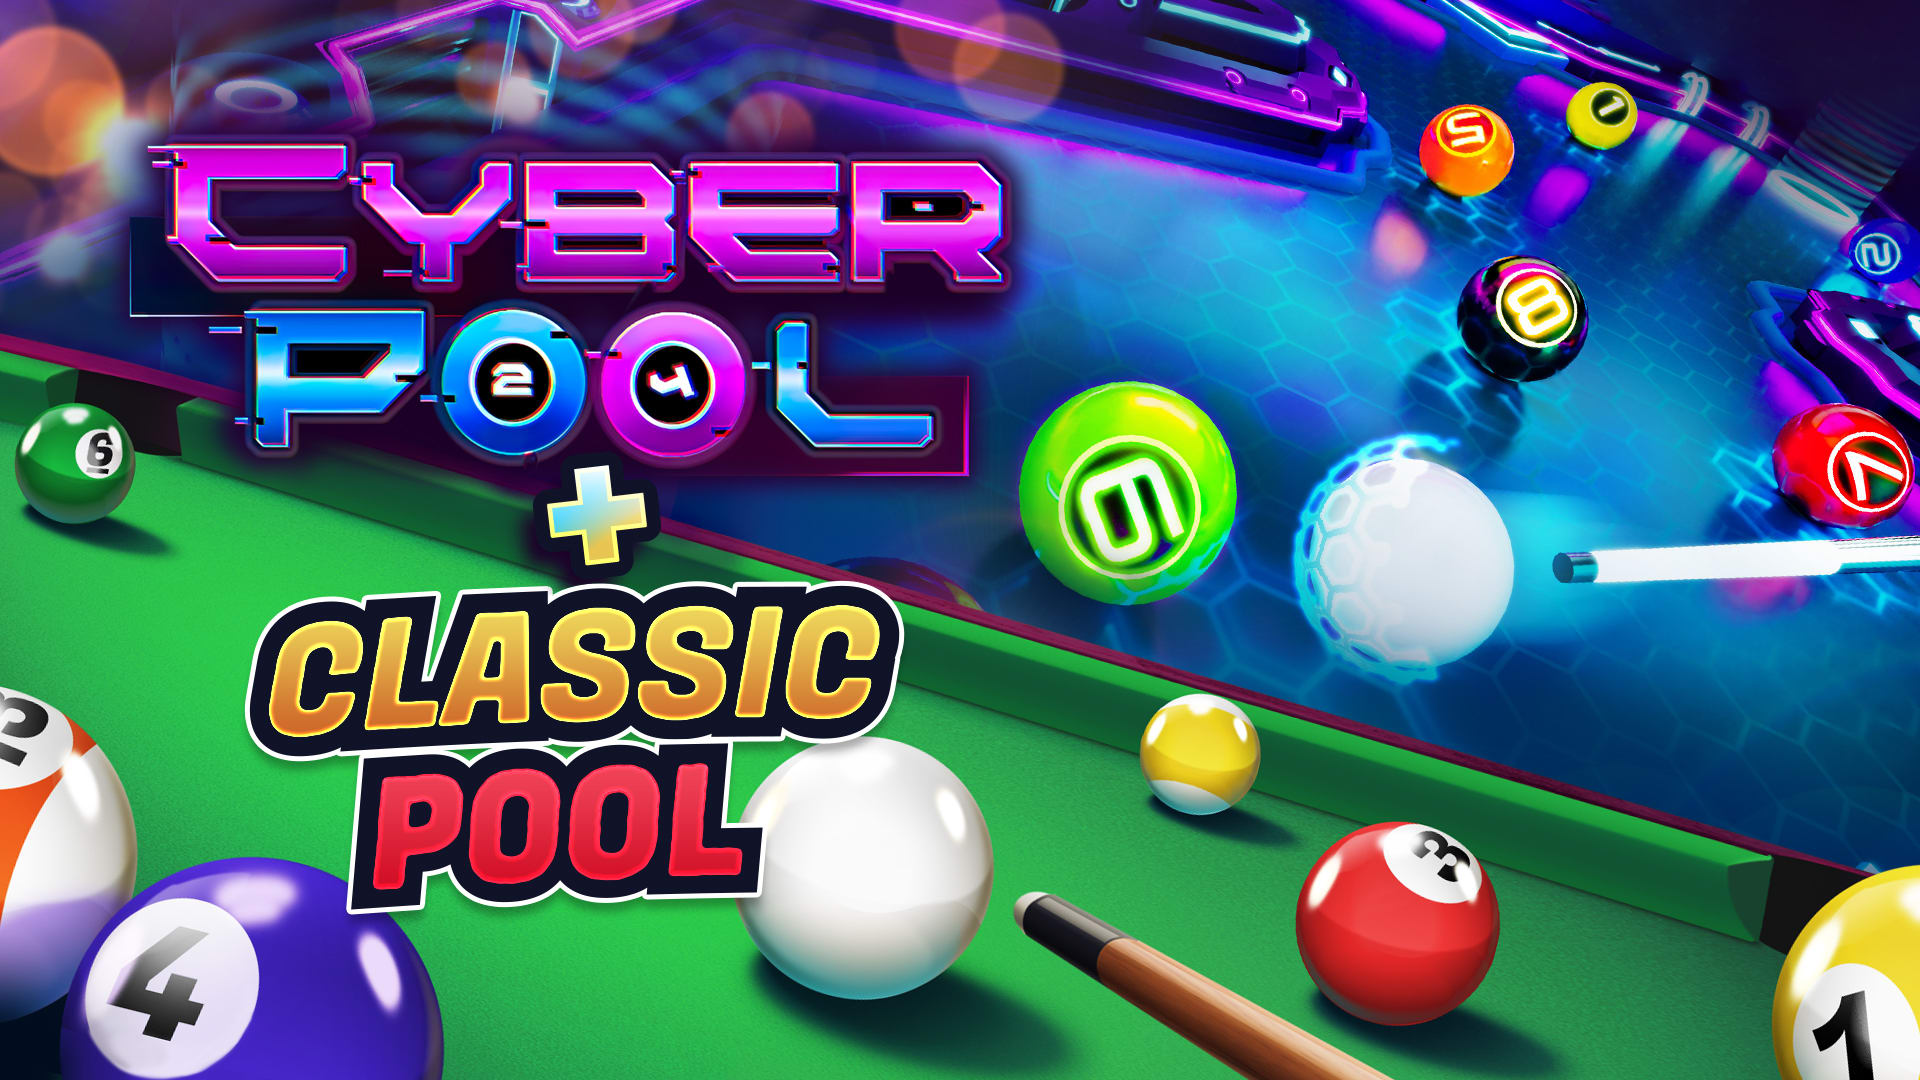 Classic Pool and Cyber Pool Bundle 1